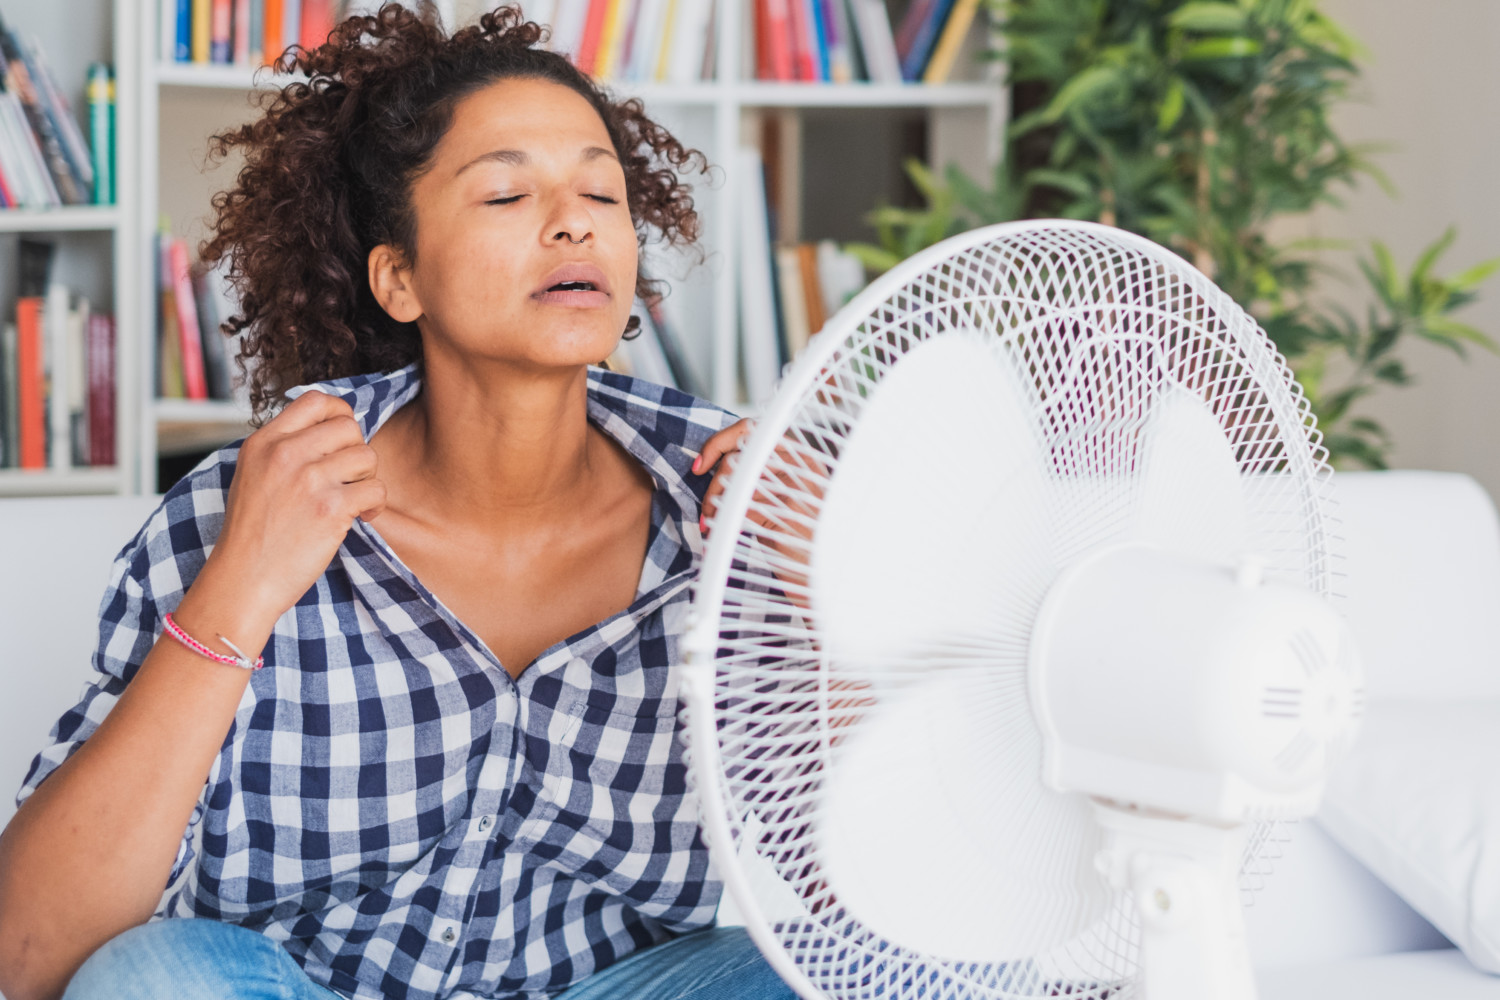 Woman uses fan to cool off in heat